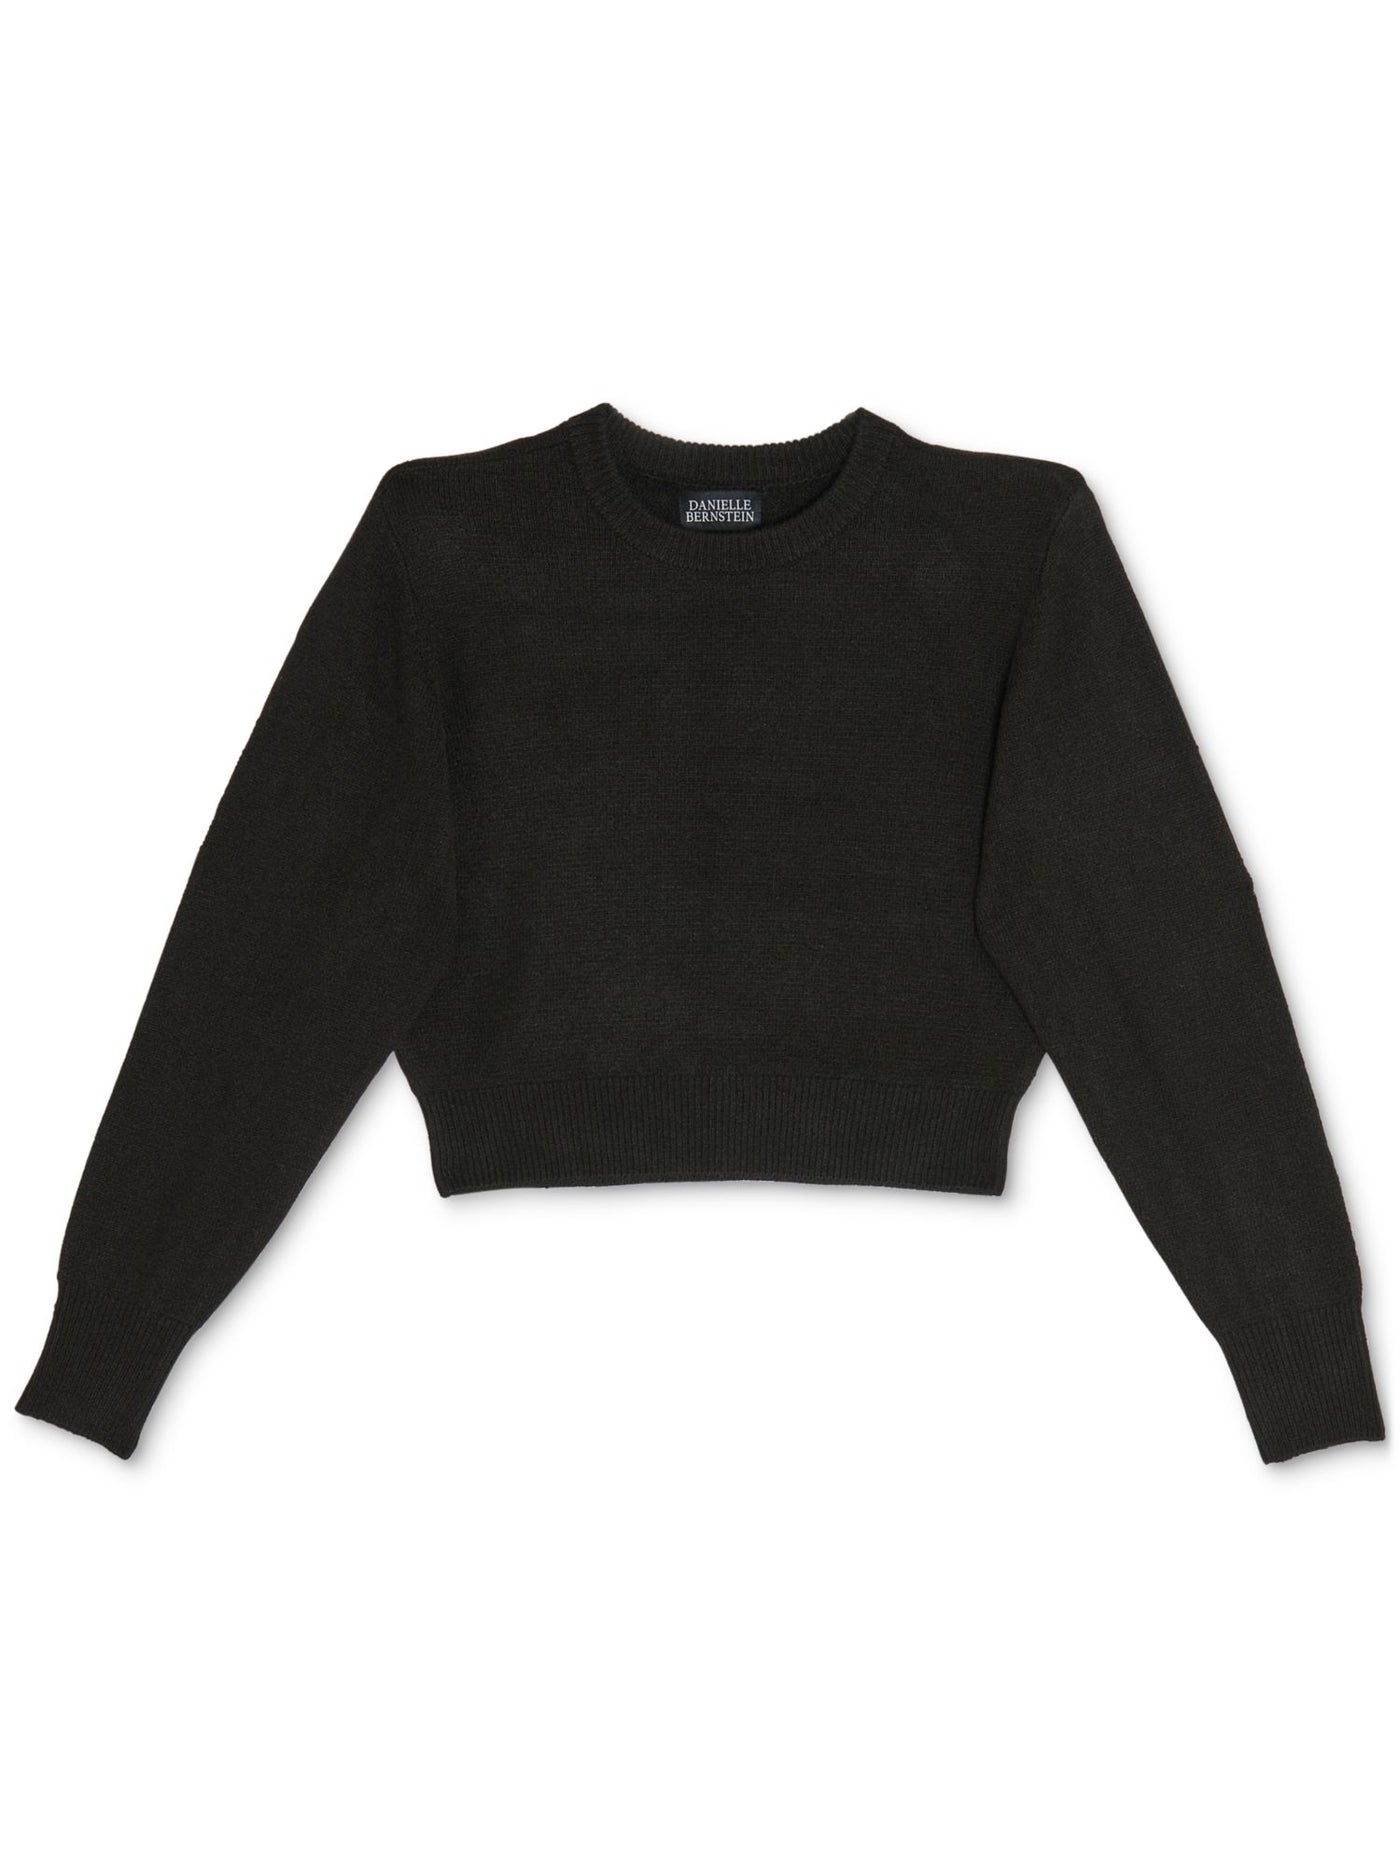 DANIELLE BERNSTEIN Womens Black Long Sleeve Jewel Neck Sweater L